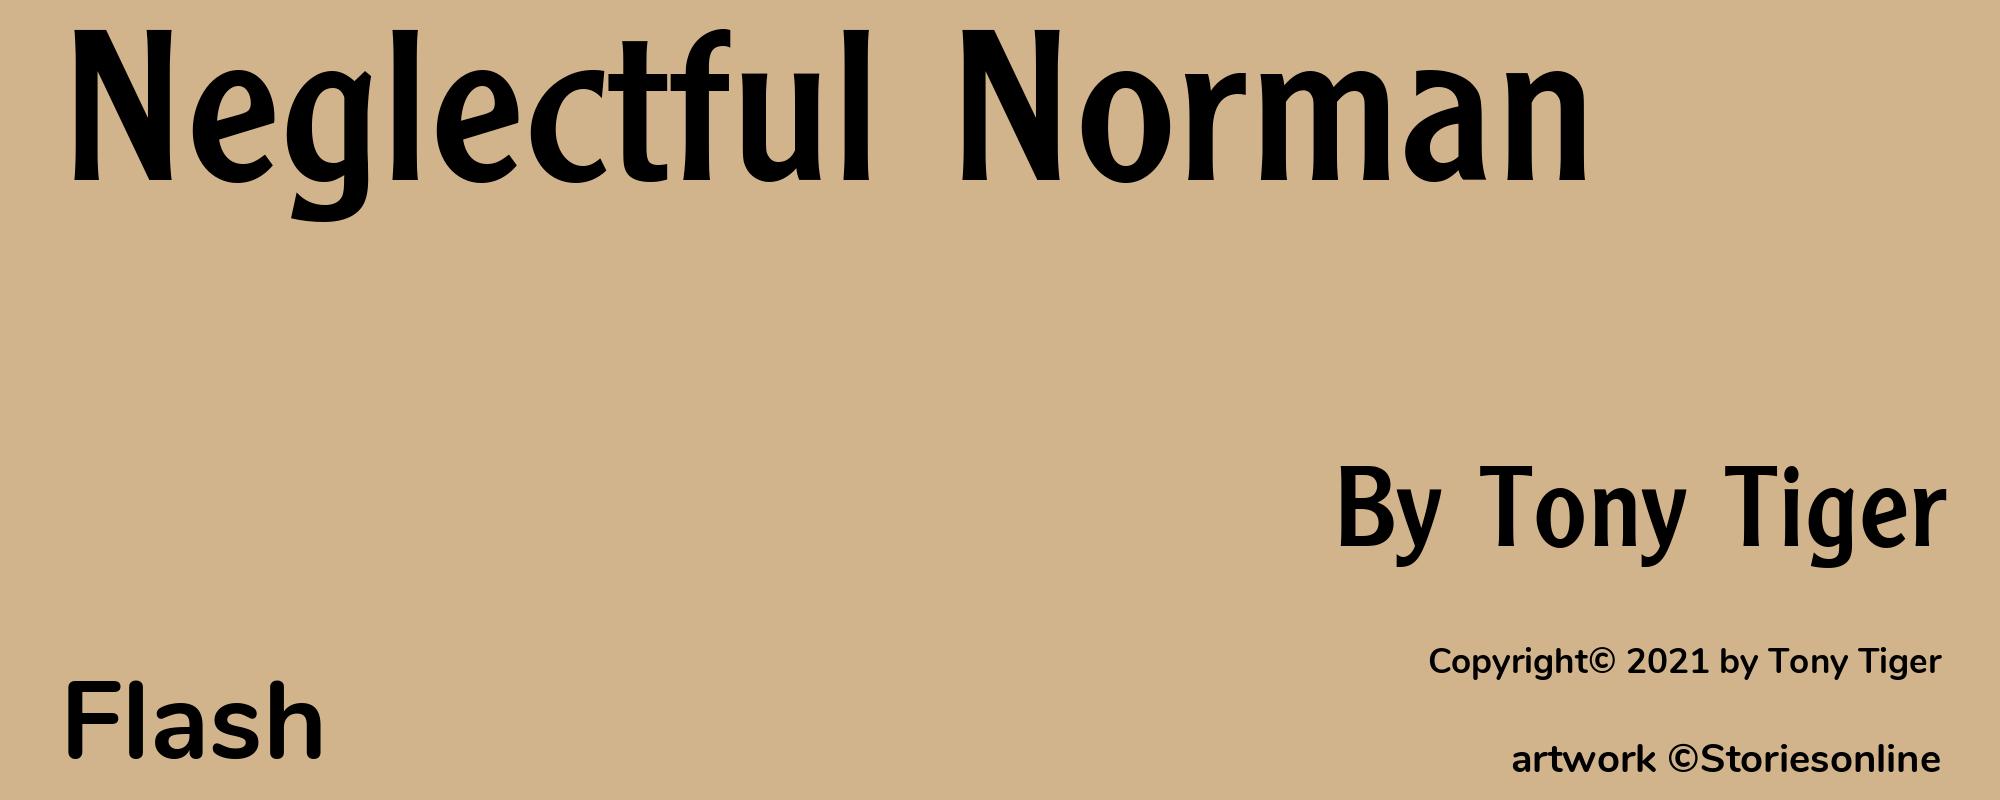 Neglectful Norman - Cover